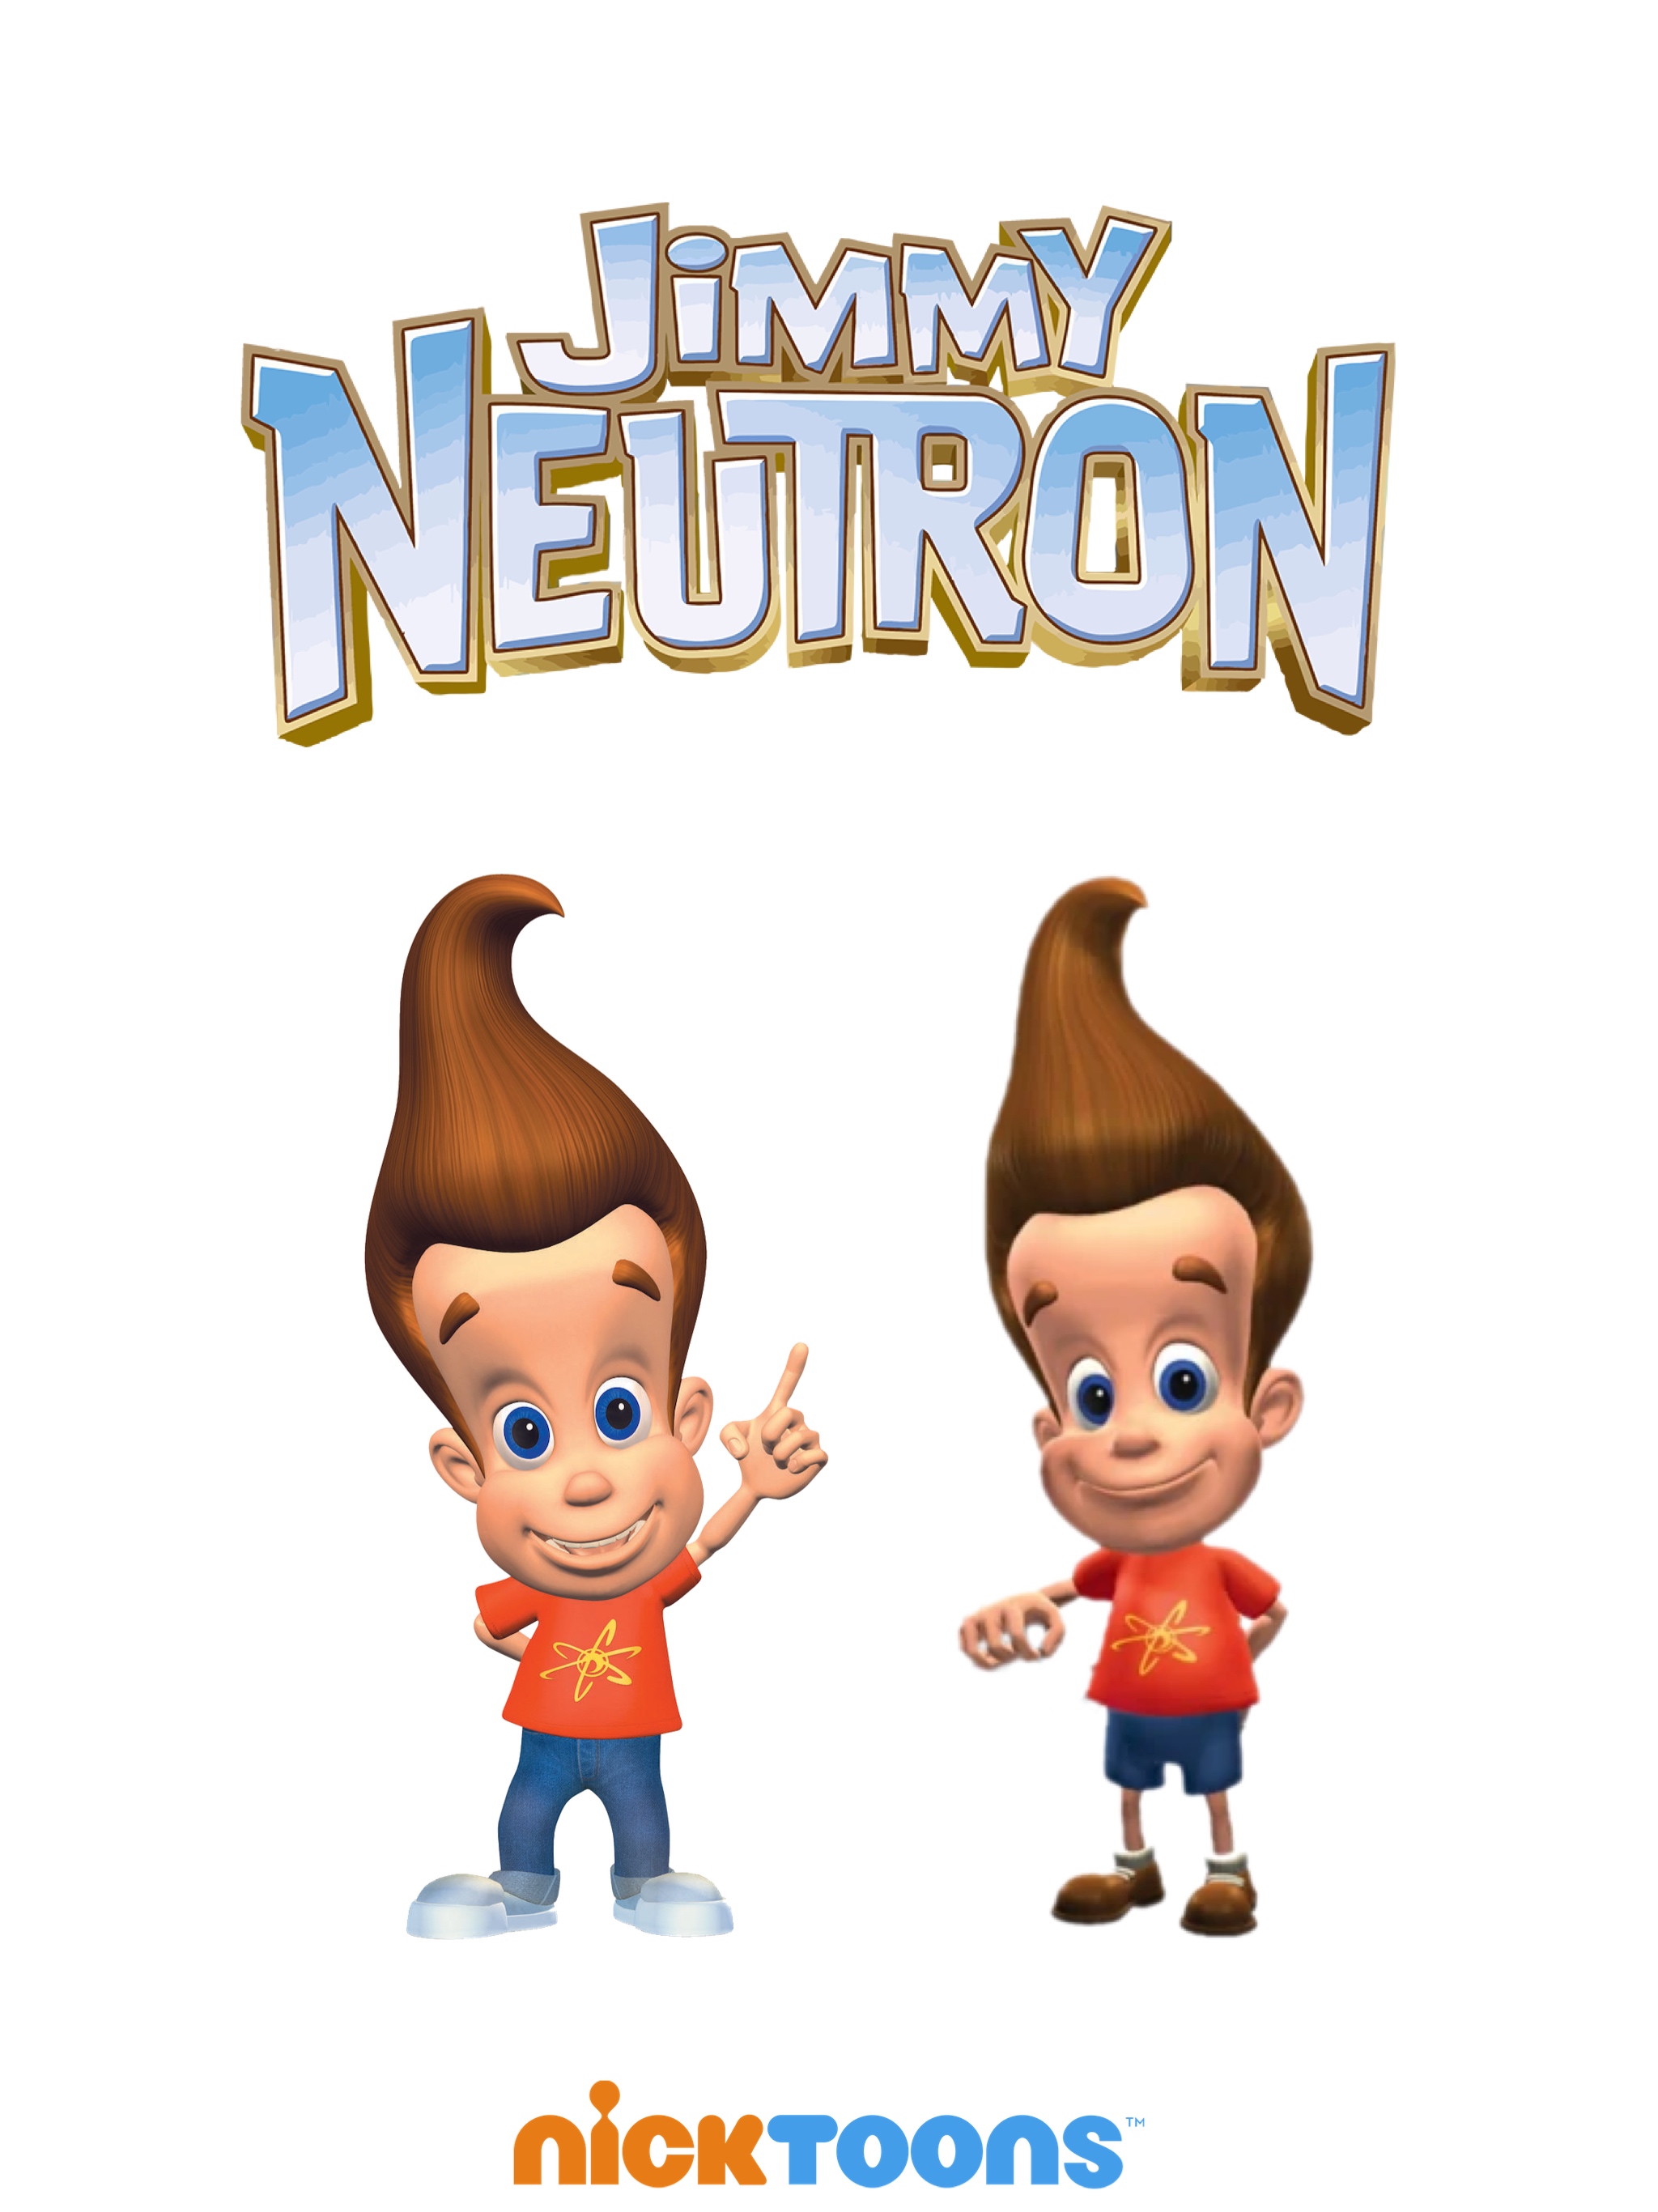 Where’s the Jimmy Neutron reboot? Fandom